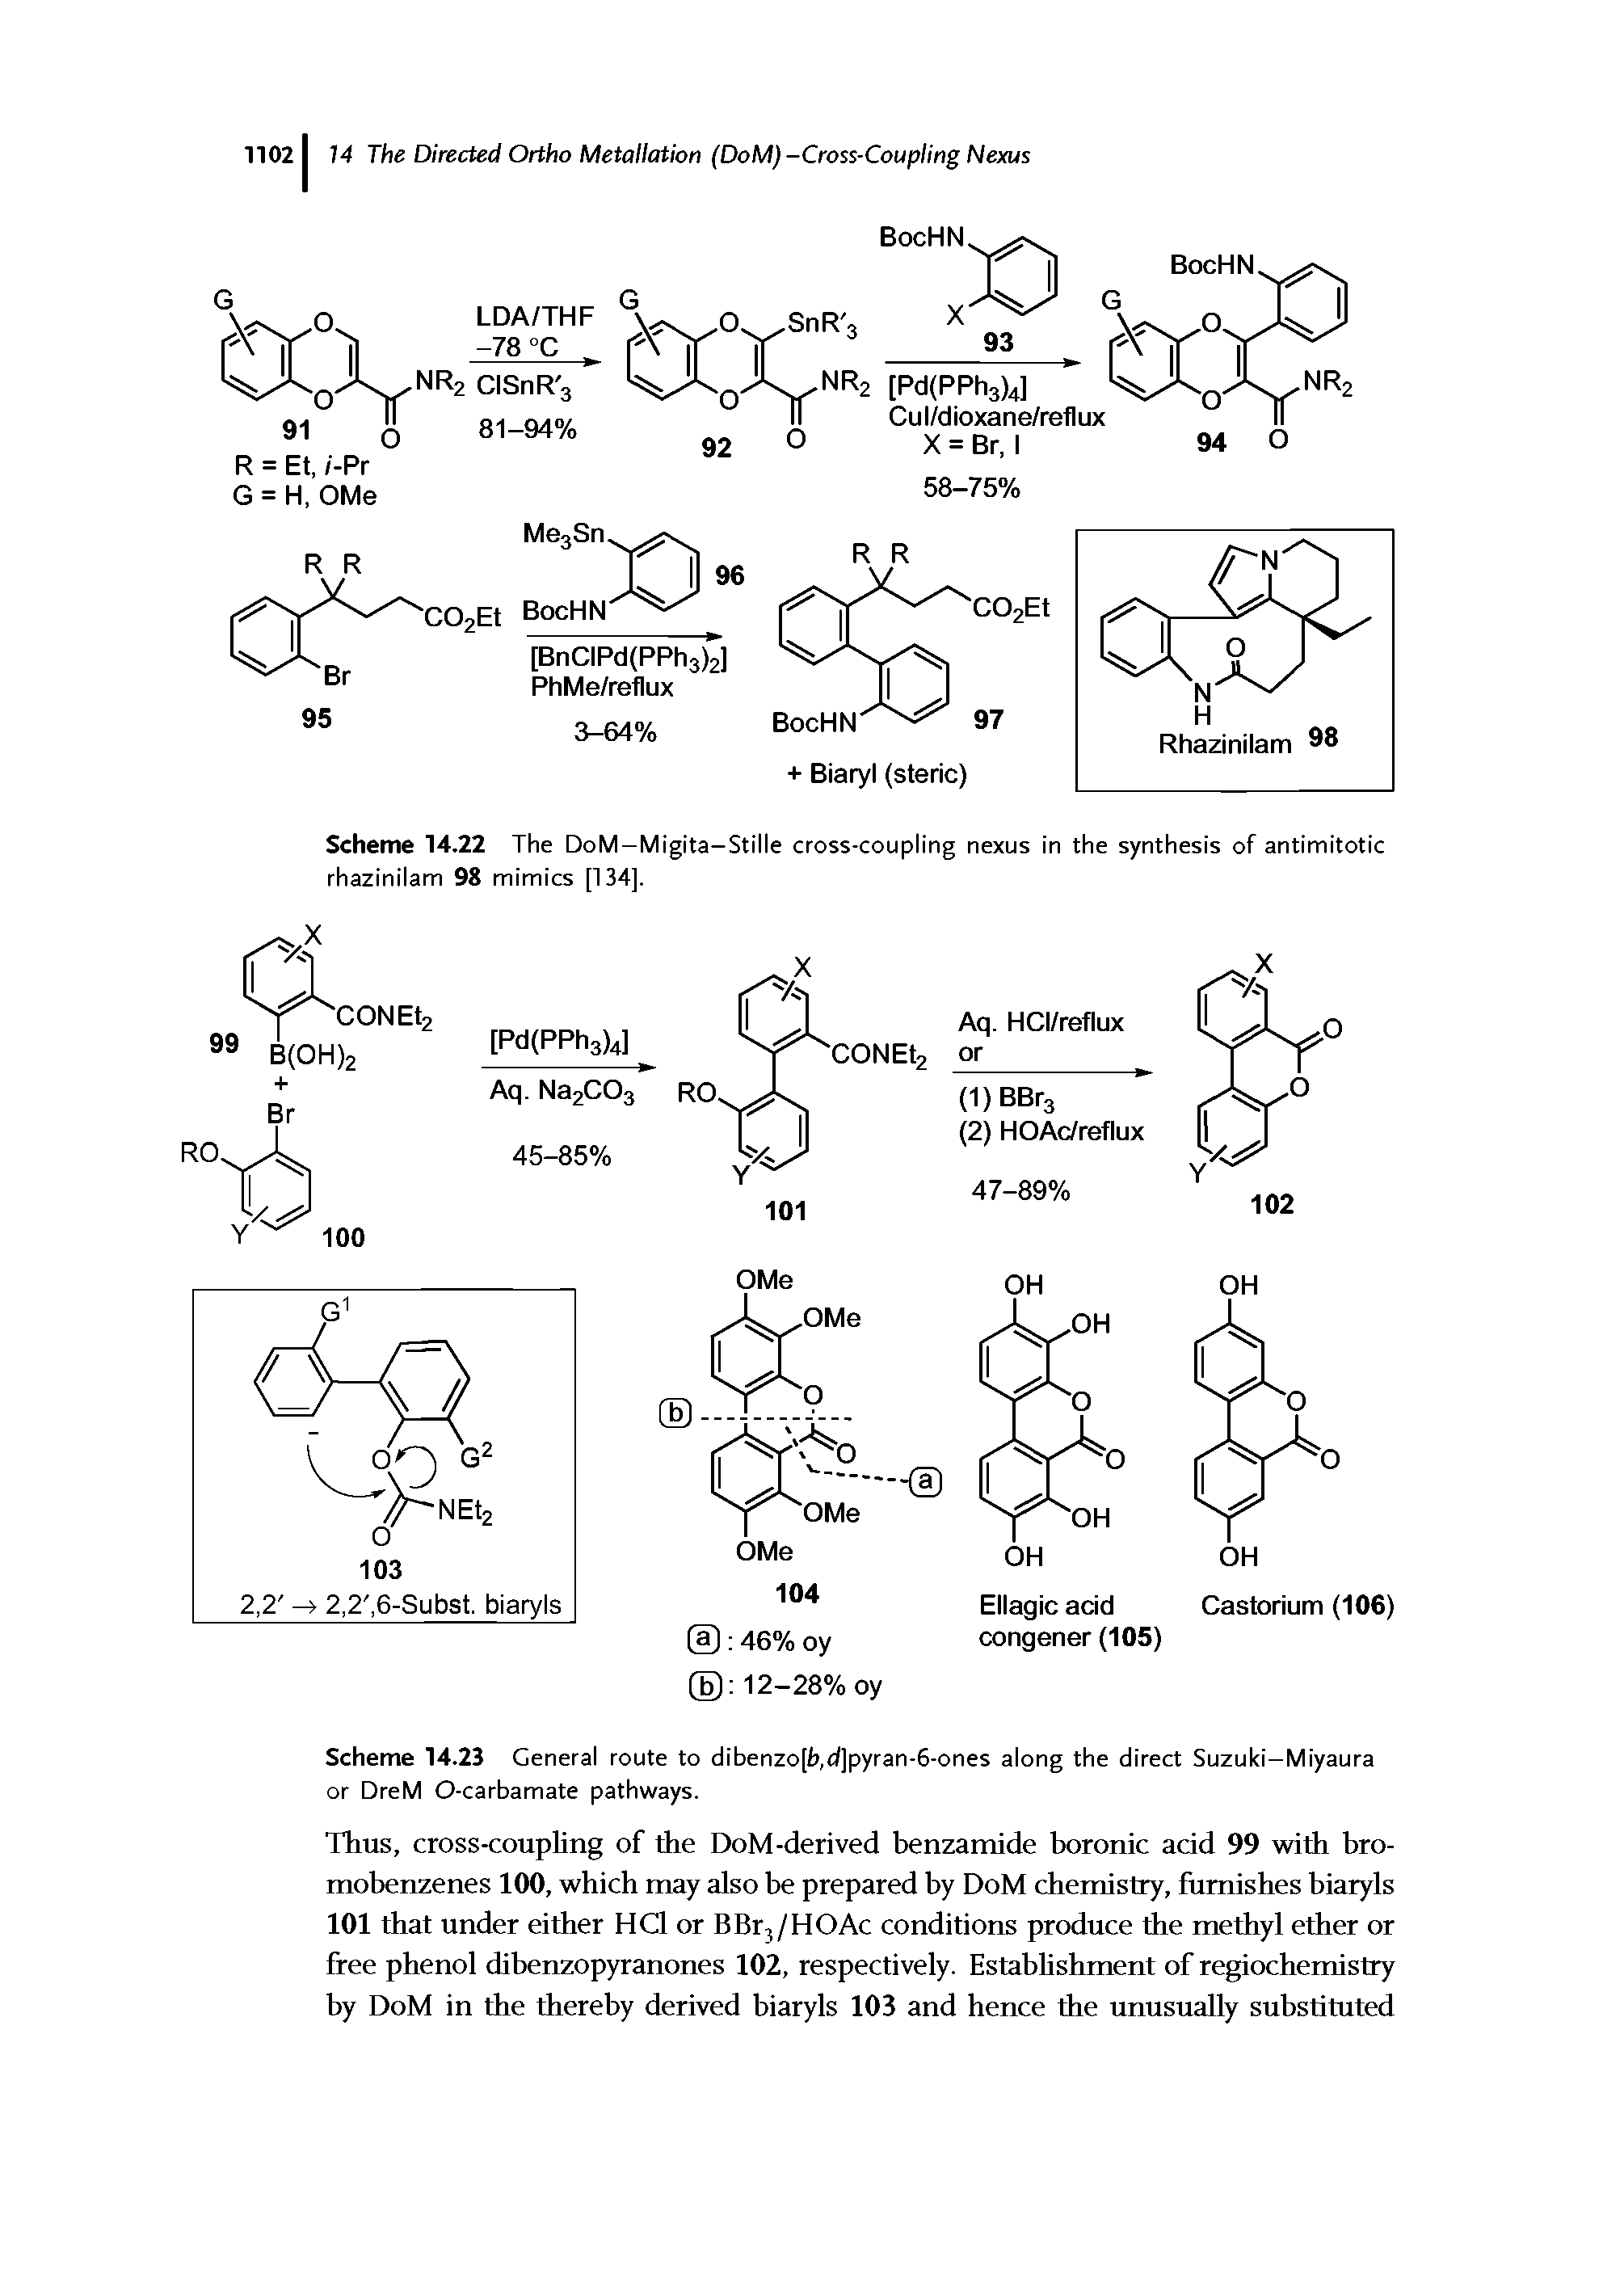 Scheme 14.22 The DoM-Migita-Stille cross-coupling nexus in the synthesis of antimitotic rhazinilam 98 mimics [134].